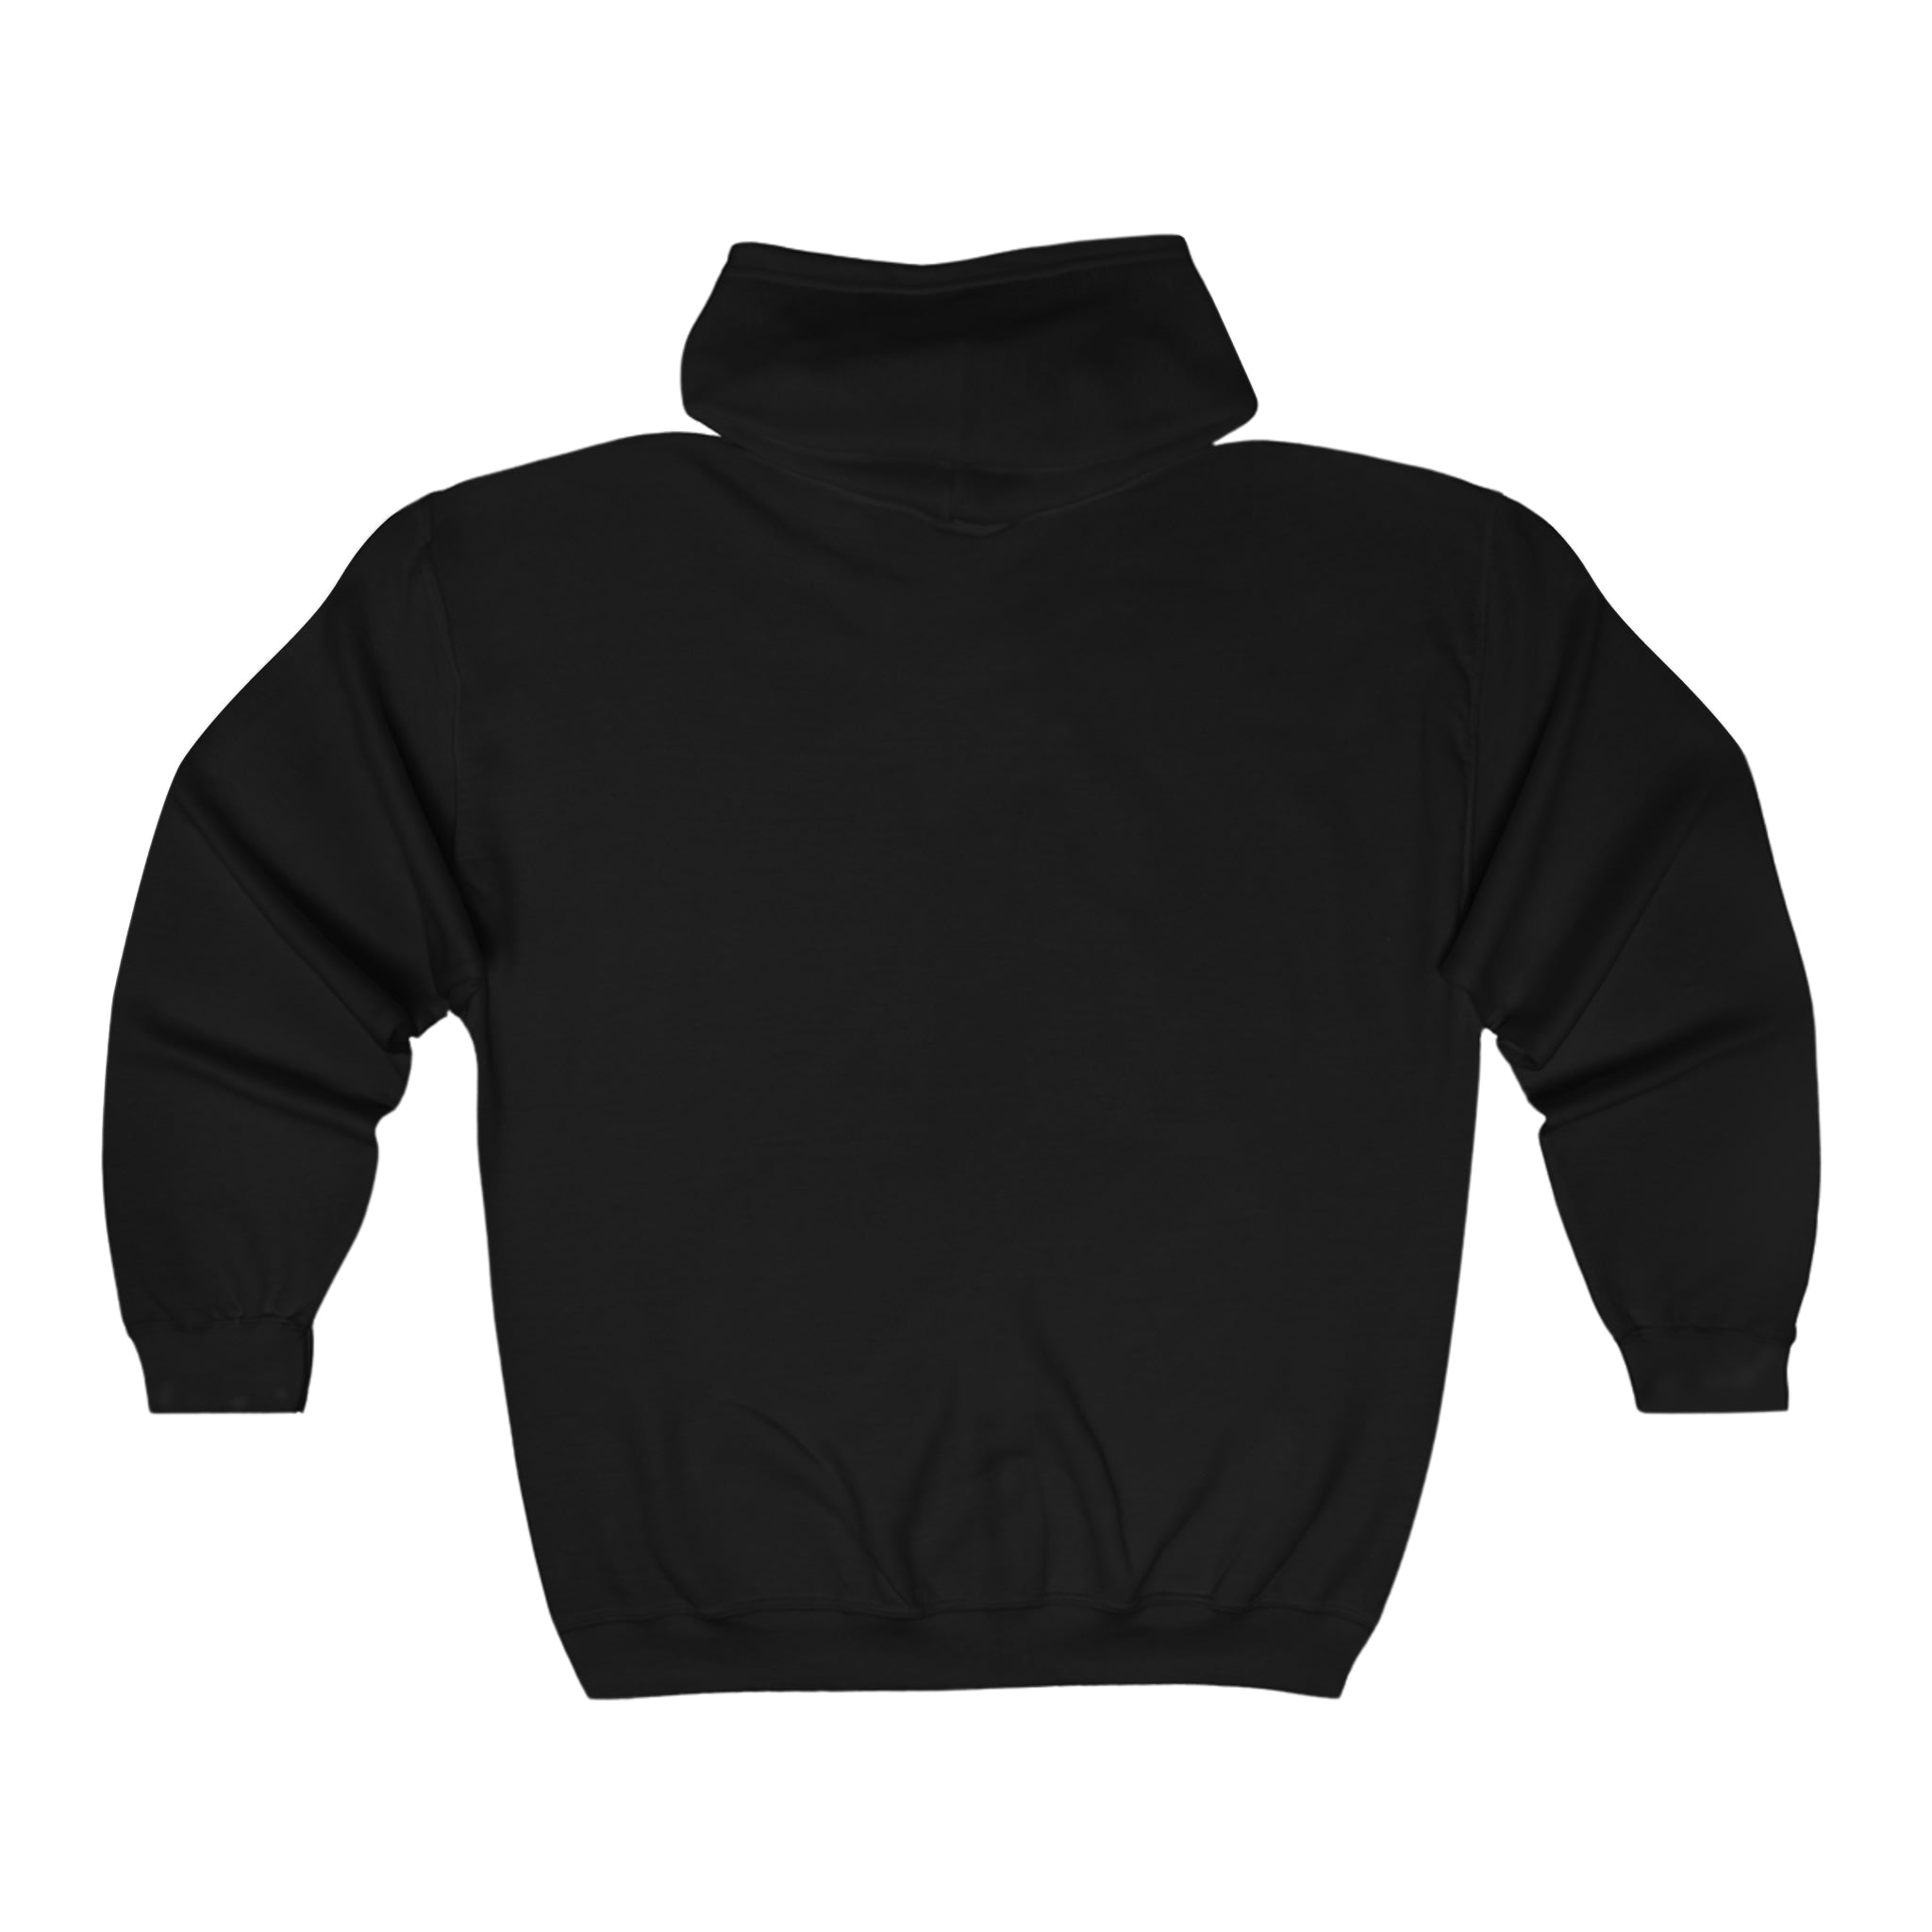 Unisex Heavy Blend™ Full Zip Hooded Sweatshirt - Baby Animals - Bear